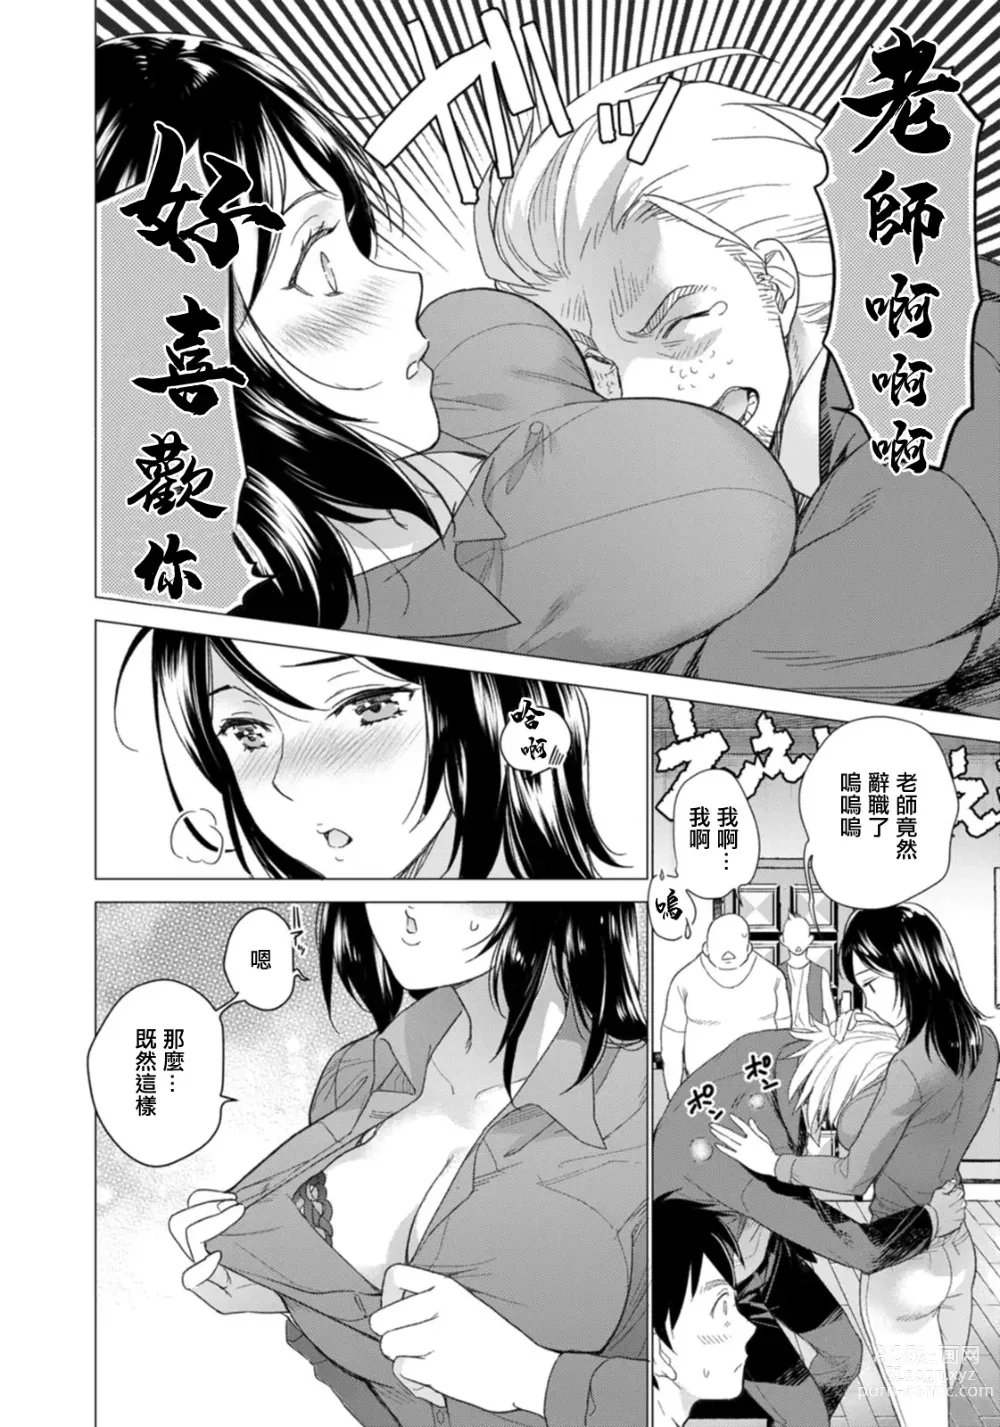 Page 8 of manga Hahako Snack